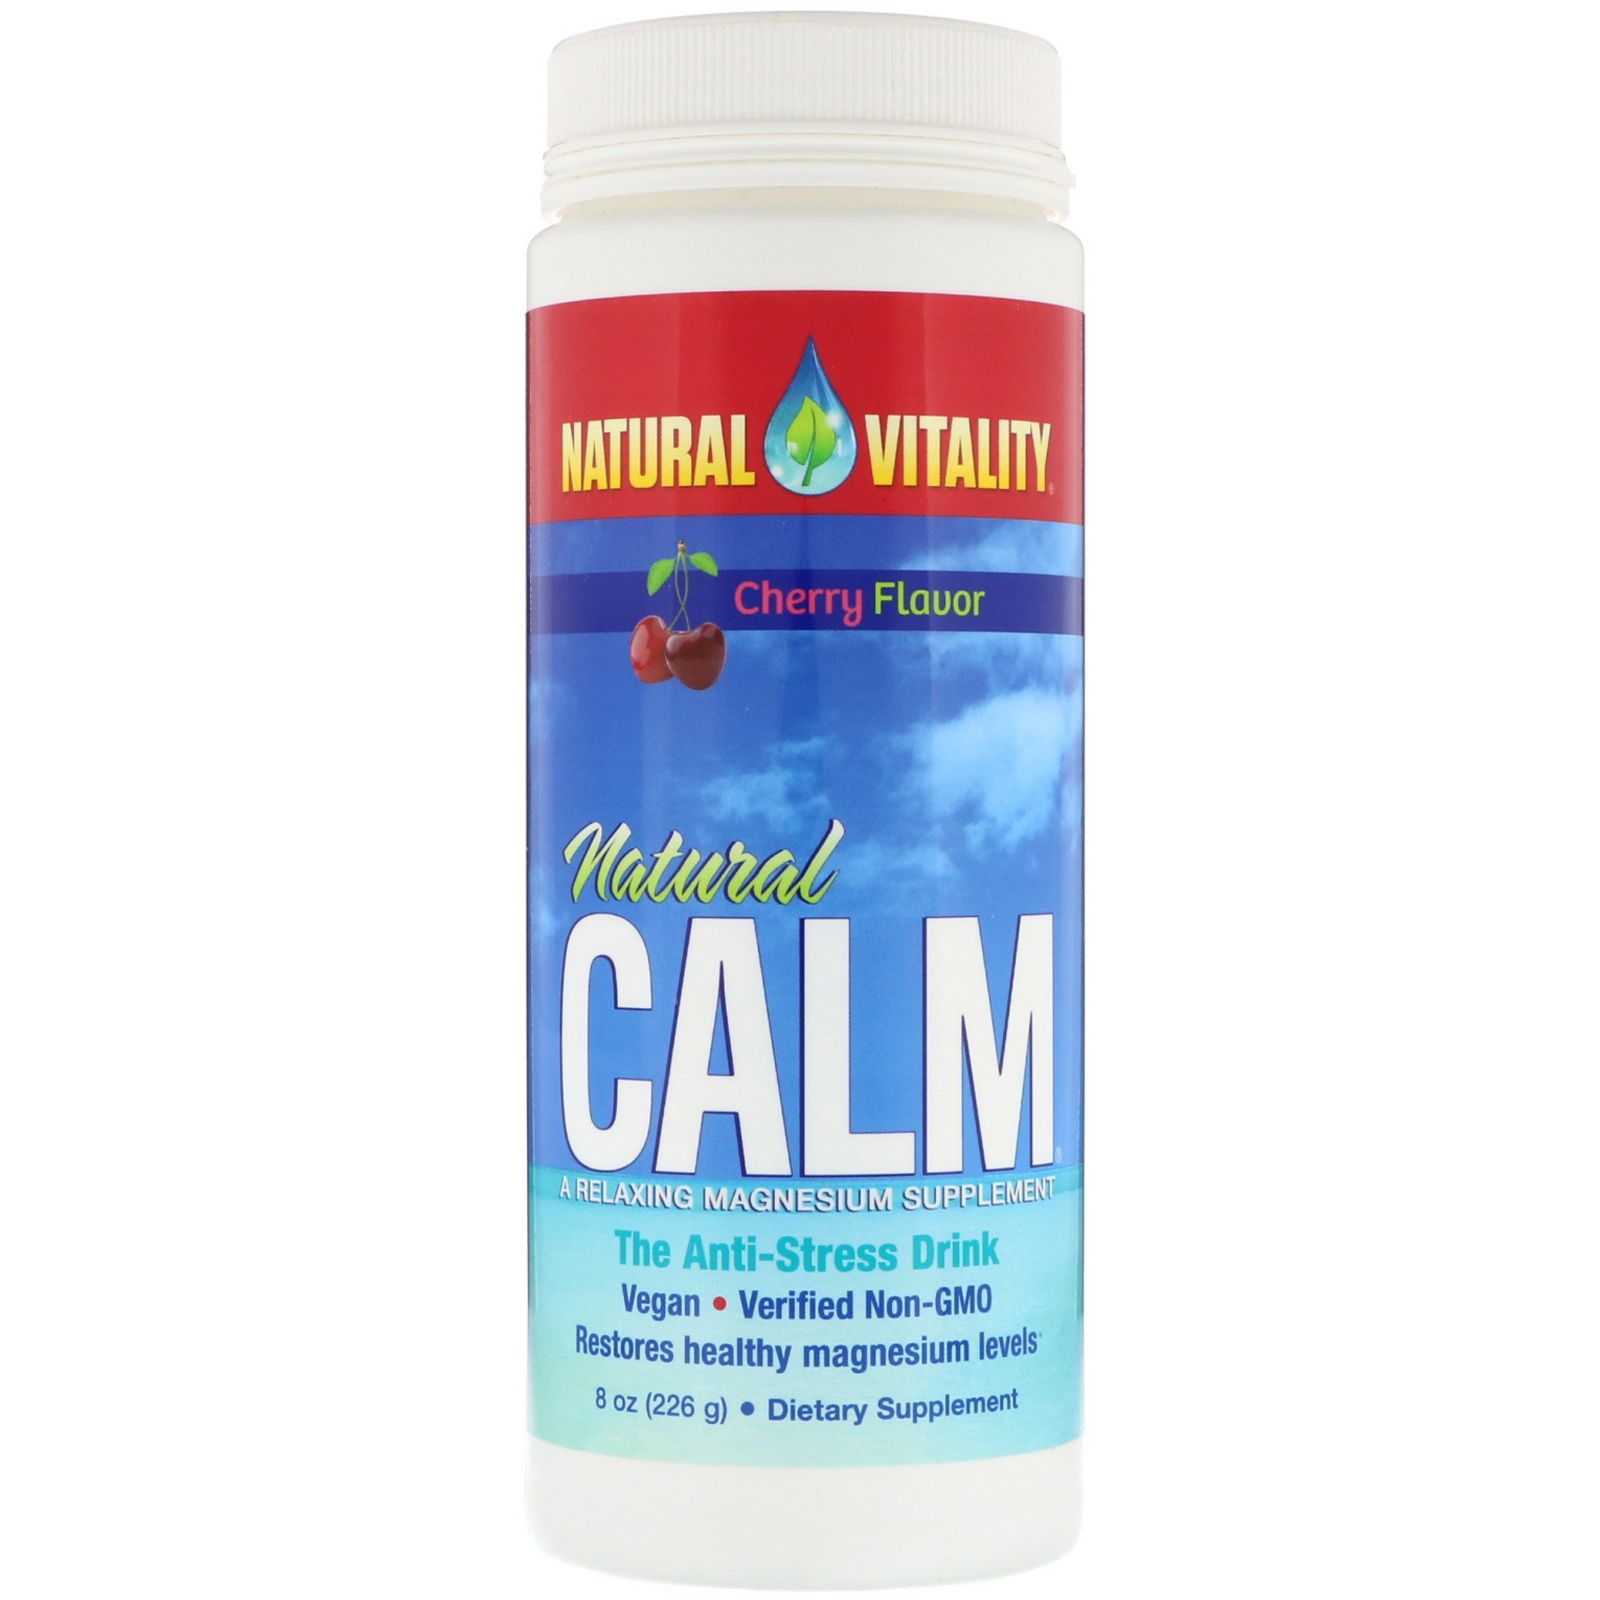 Natural calm. Natural Calm магний. Natural Vitality Calm a Magnesium Supplement. Natural Vitality natural Calm. Магний IHERB.